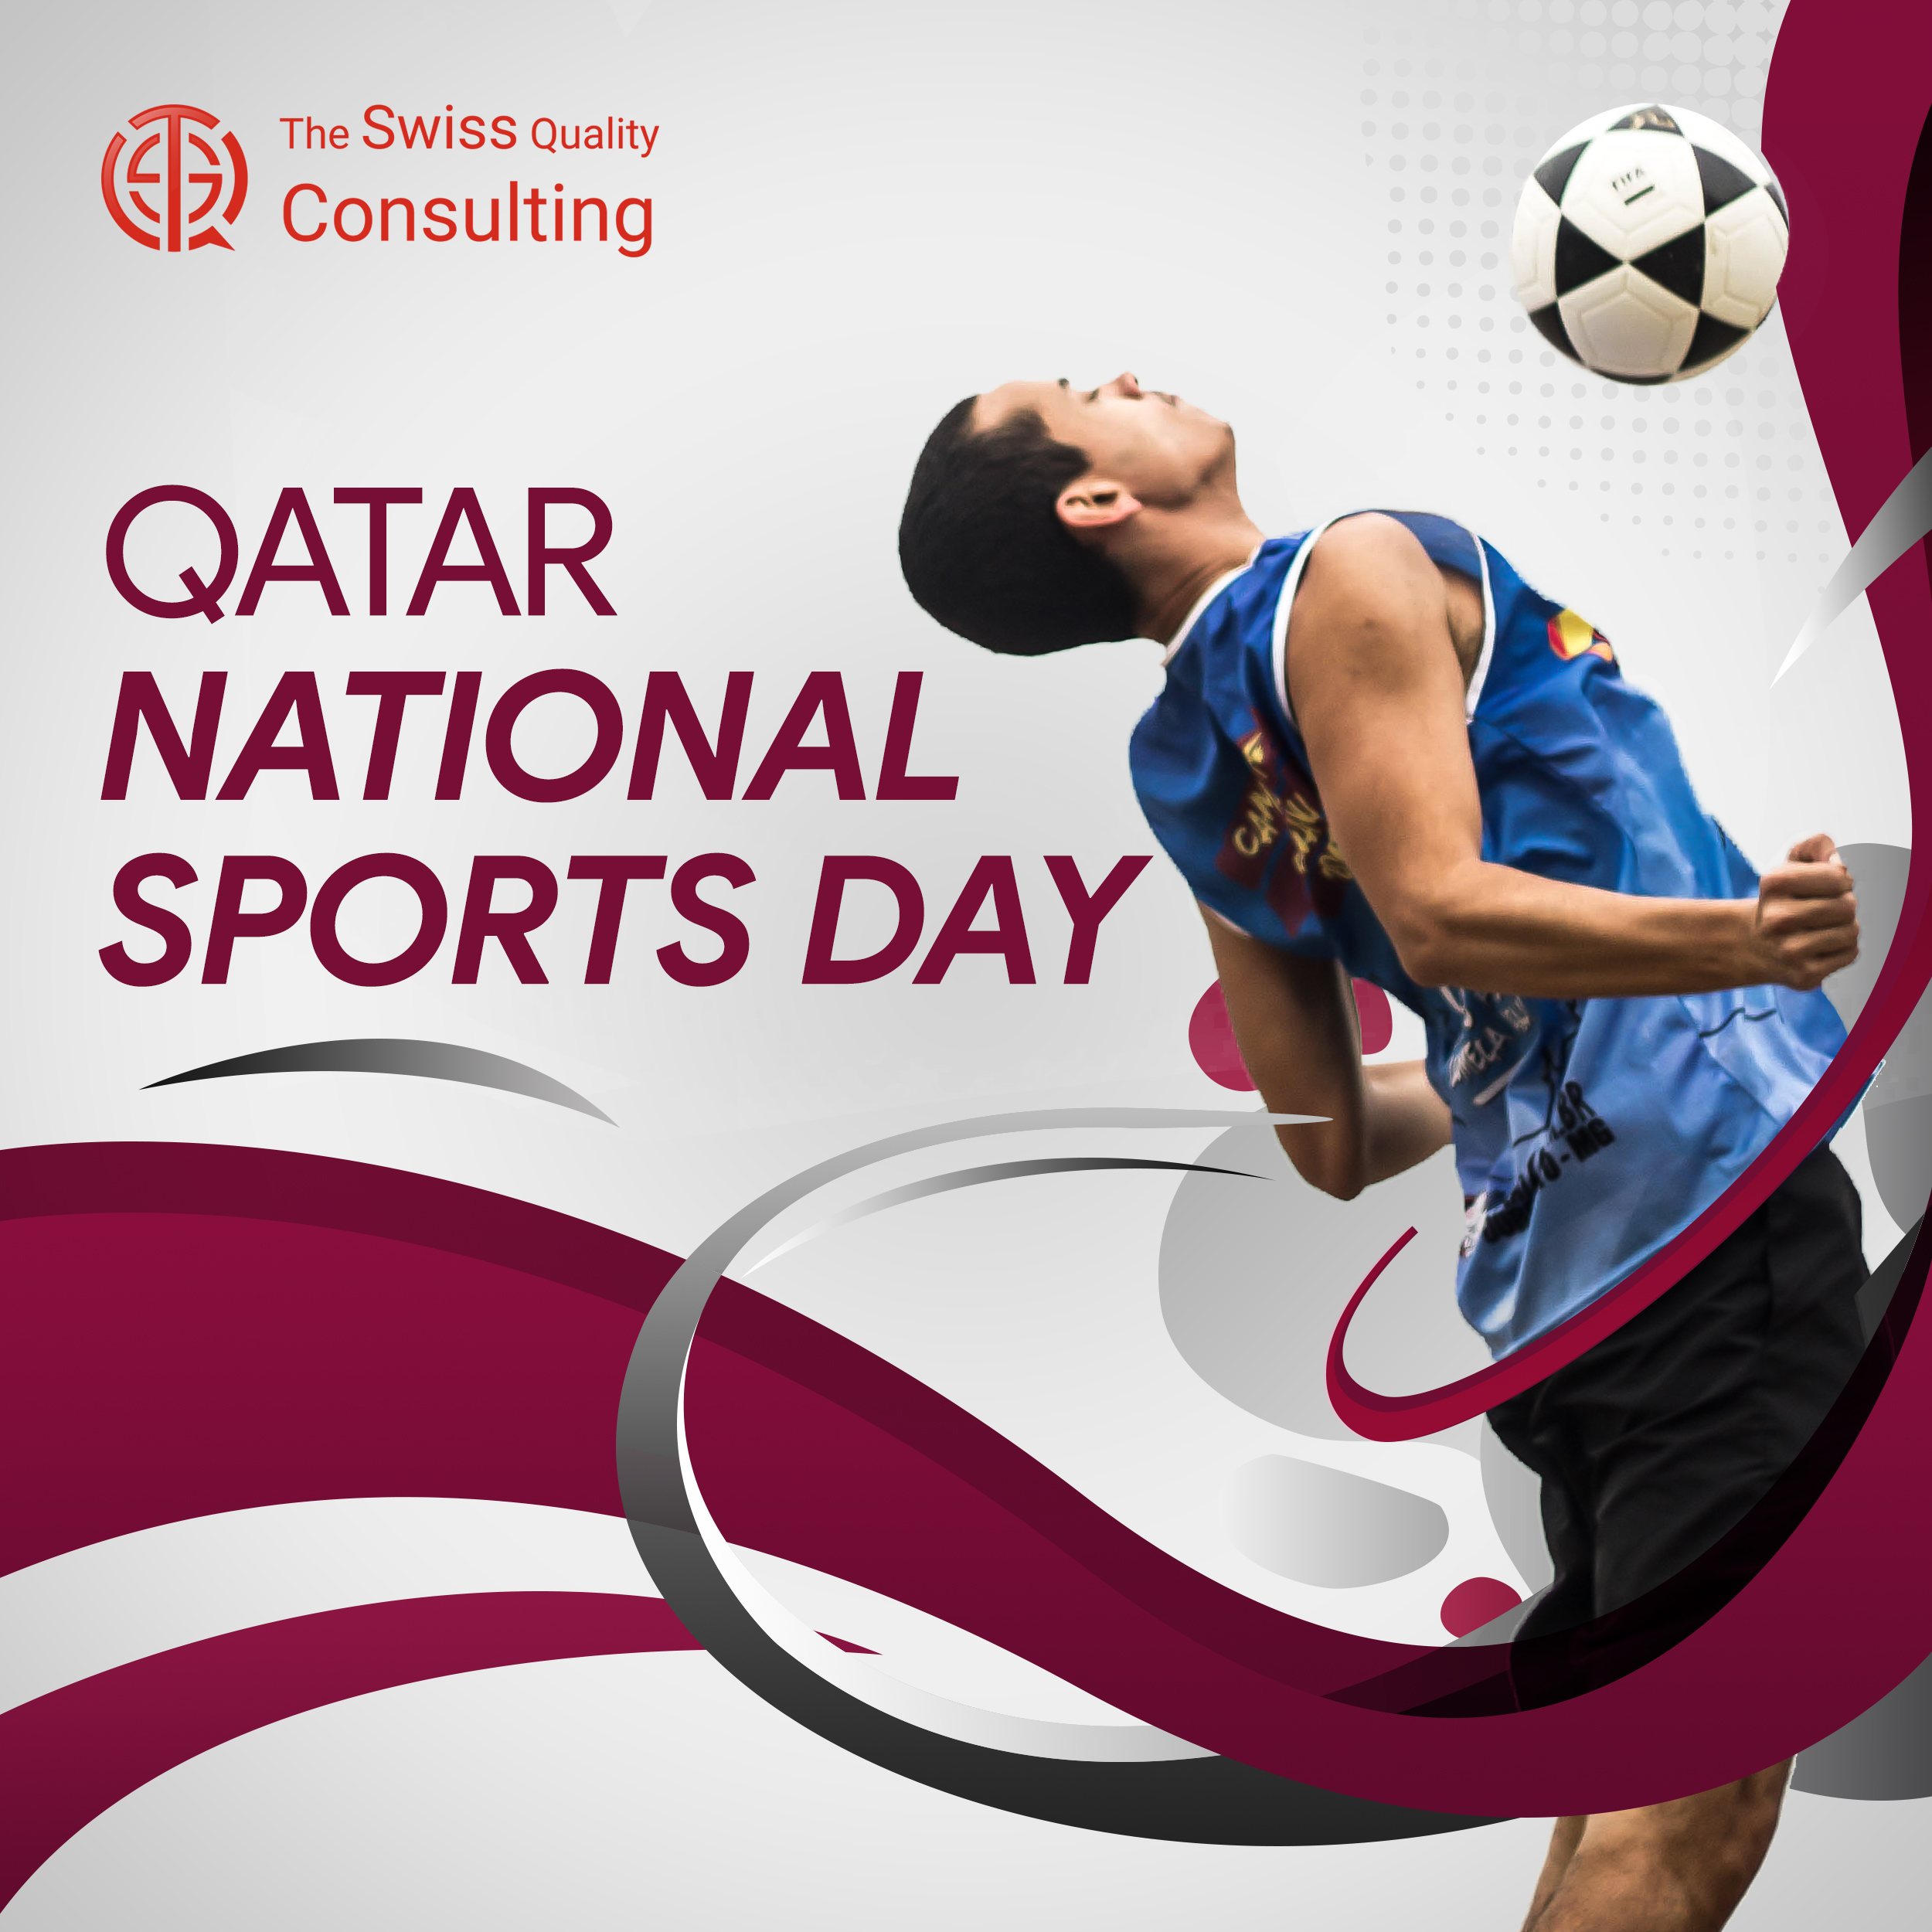 It's Qatar National Sports Day!